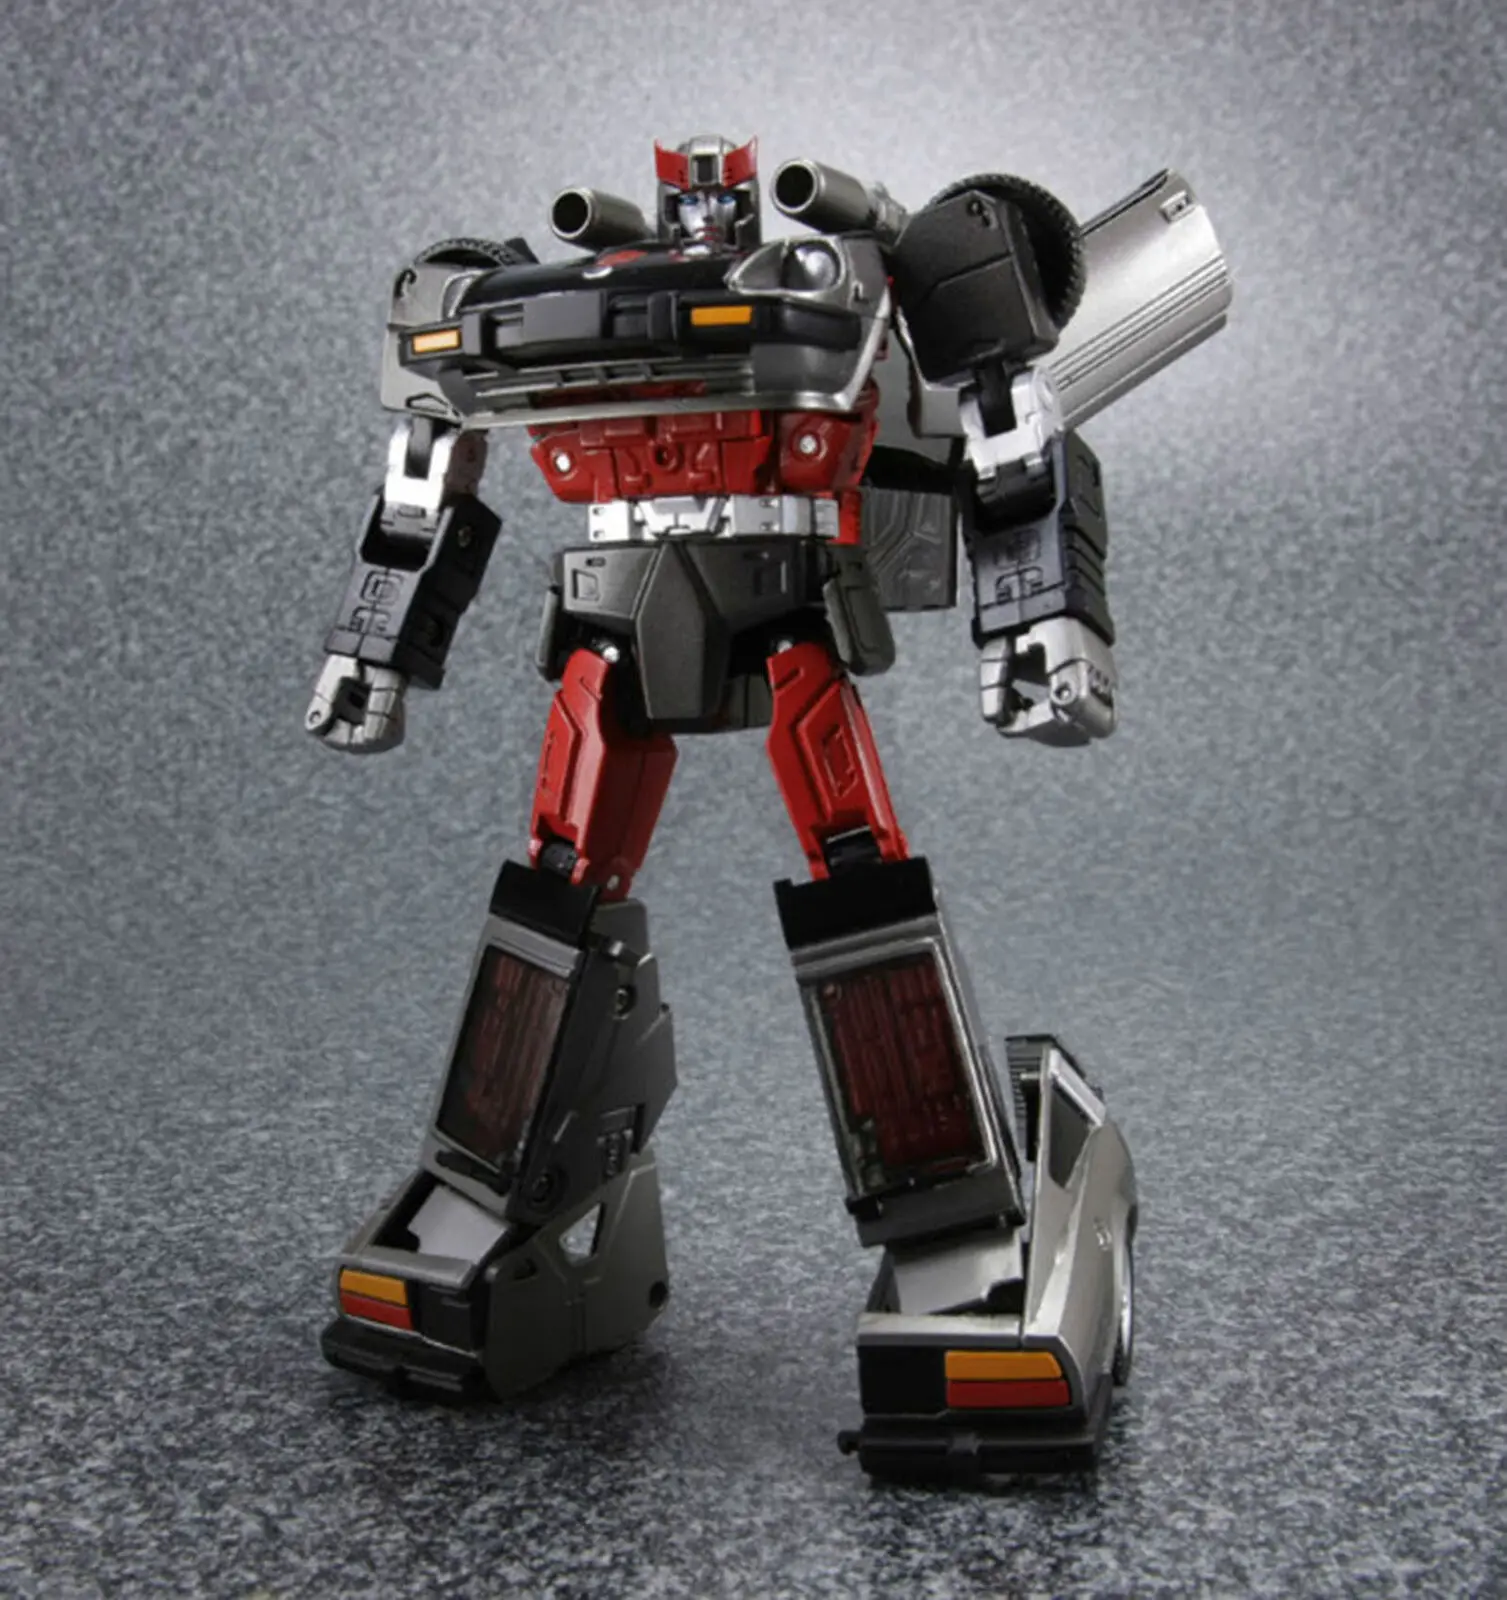 

TAKARA TOMY Transformers Masterpiece MP-18 MP18 STREAK Autobots Action Figure Model Toy Gifts Kids